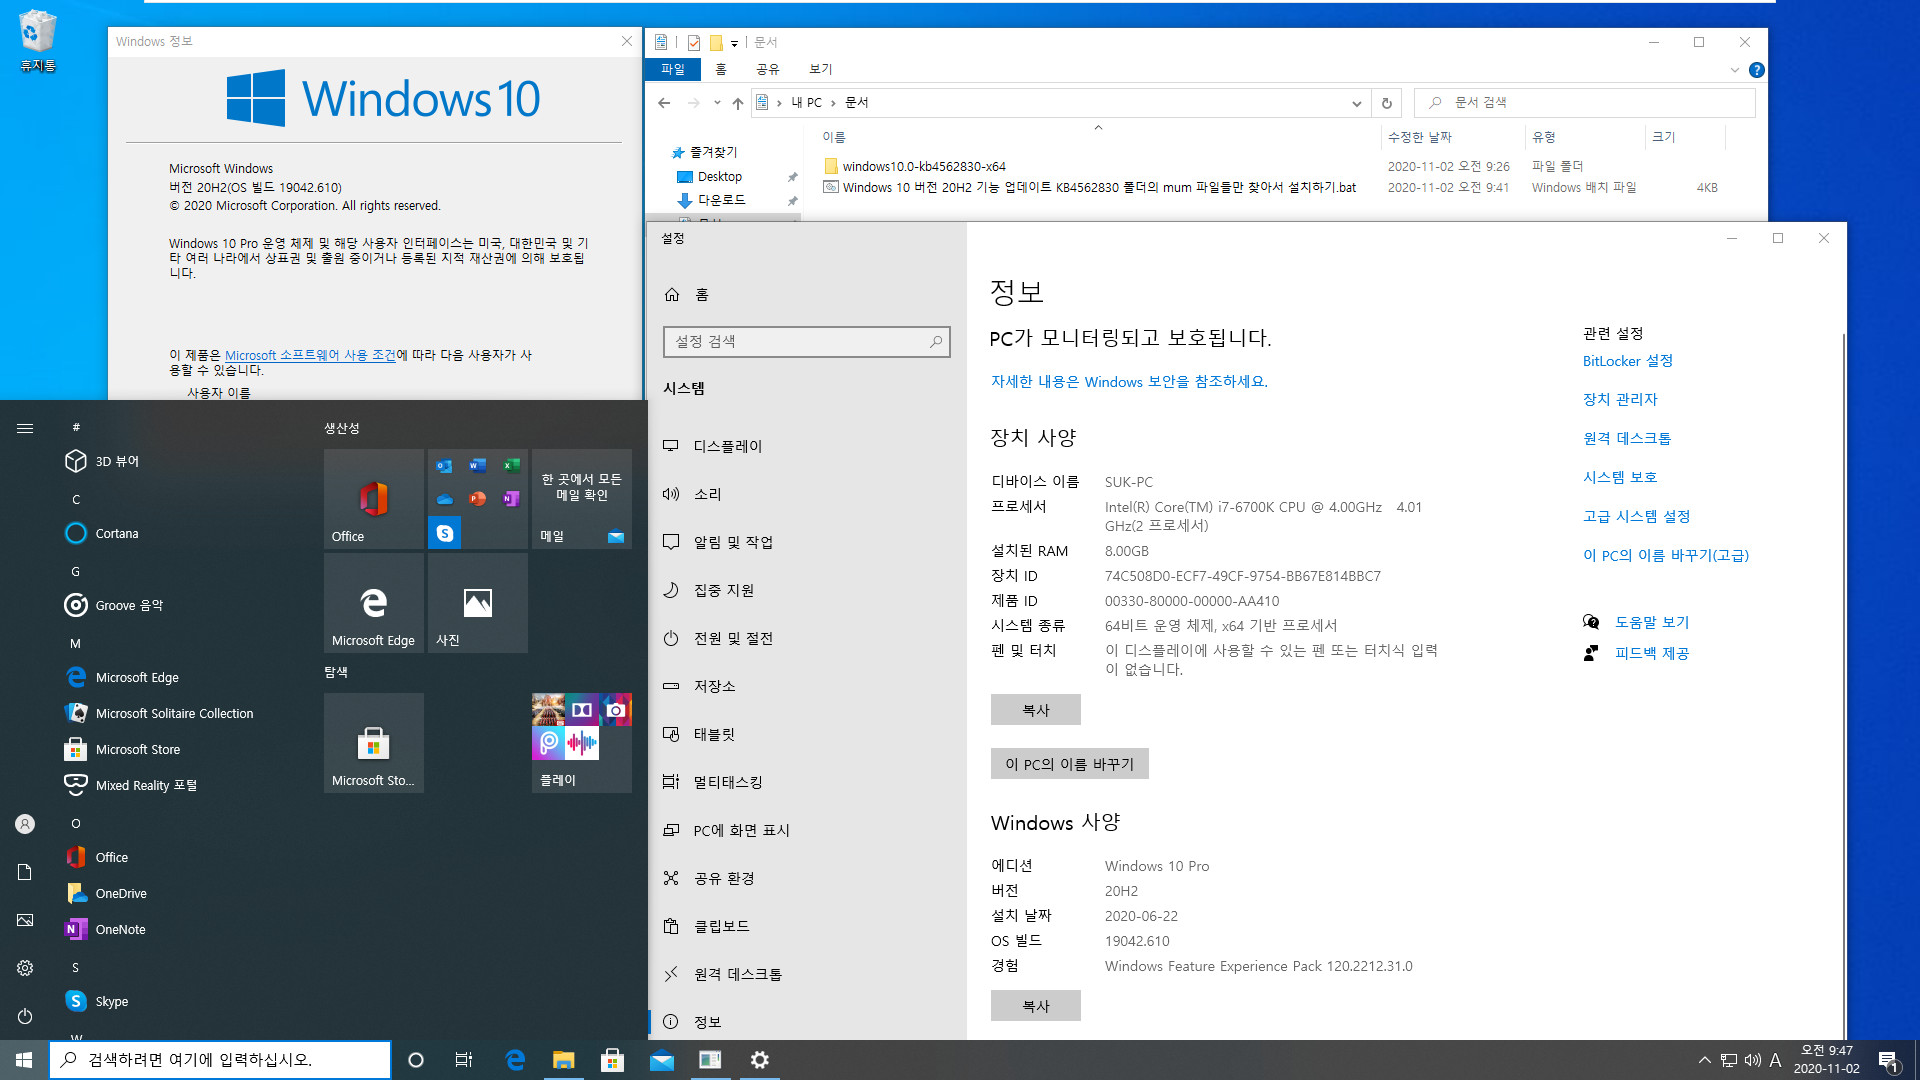 Windows 10 버전 20H2 기능 업데이트 KB4562830 폴더의 mum 파일들만 찾아서 설치하기.bat - 크로미엄 엣지 설치하지 않고 버전 20H2만 설치하기 테스트 2020-11-02_094705.jpg